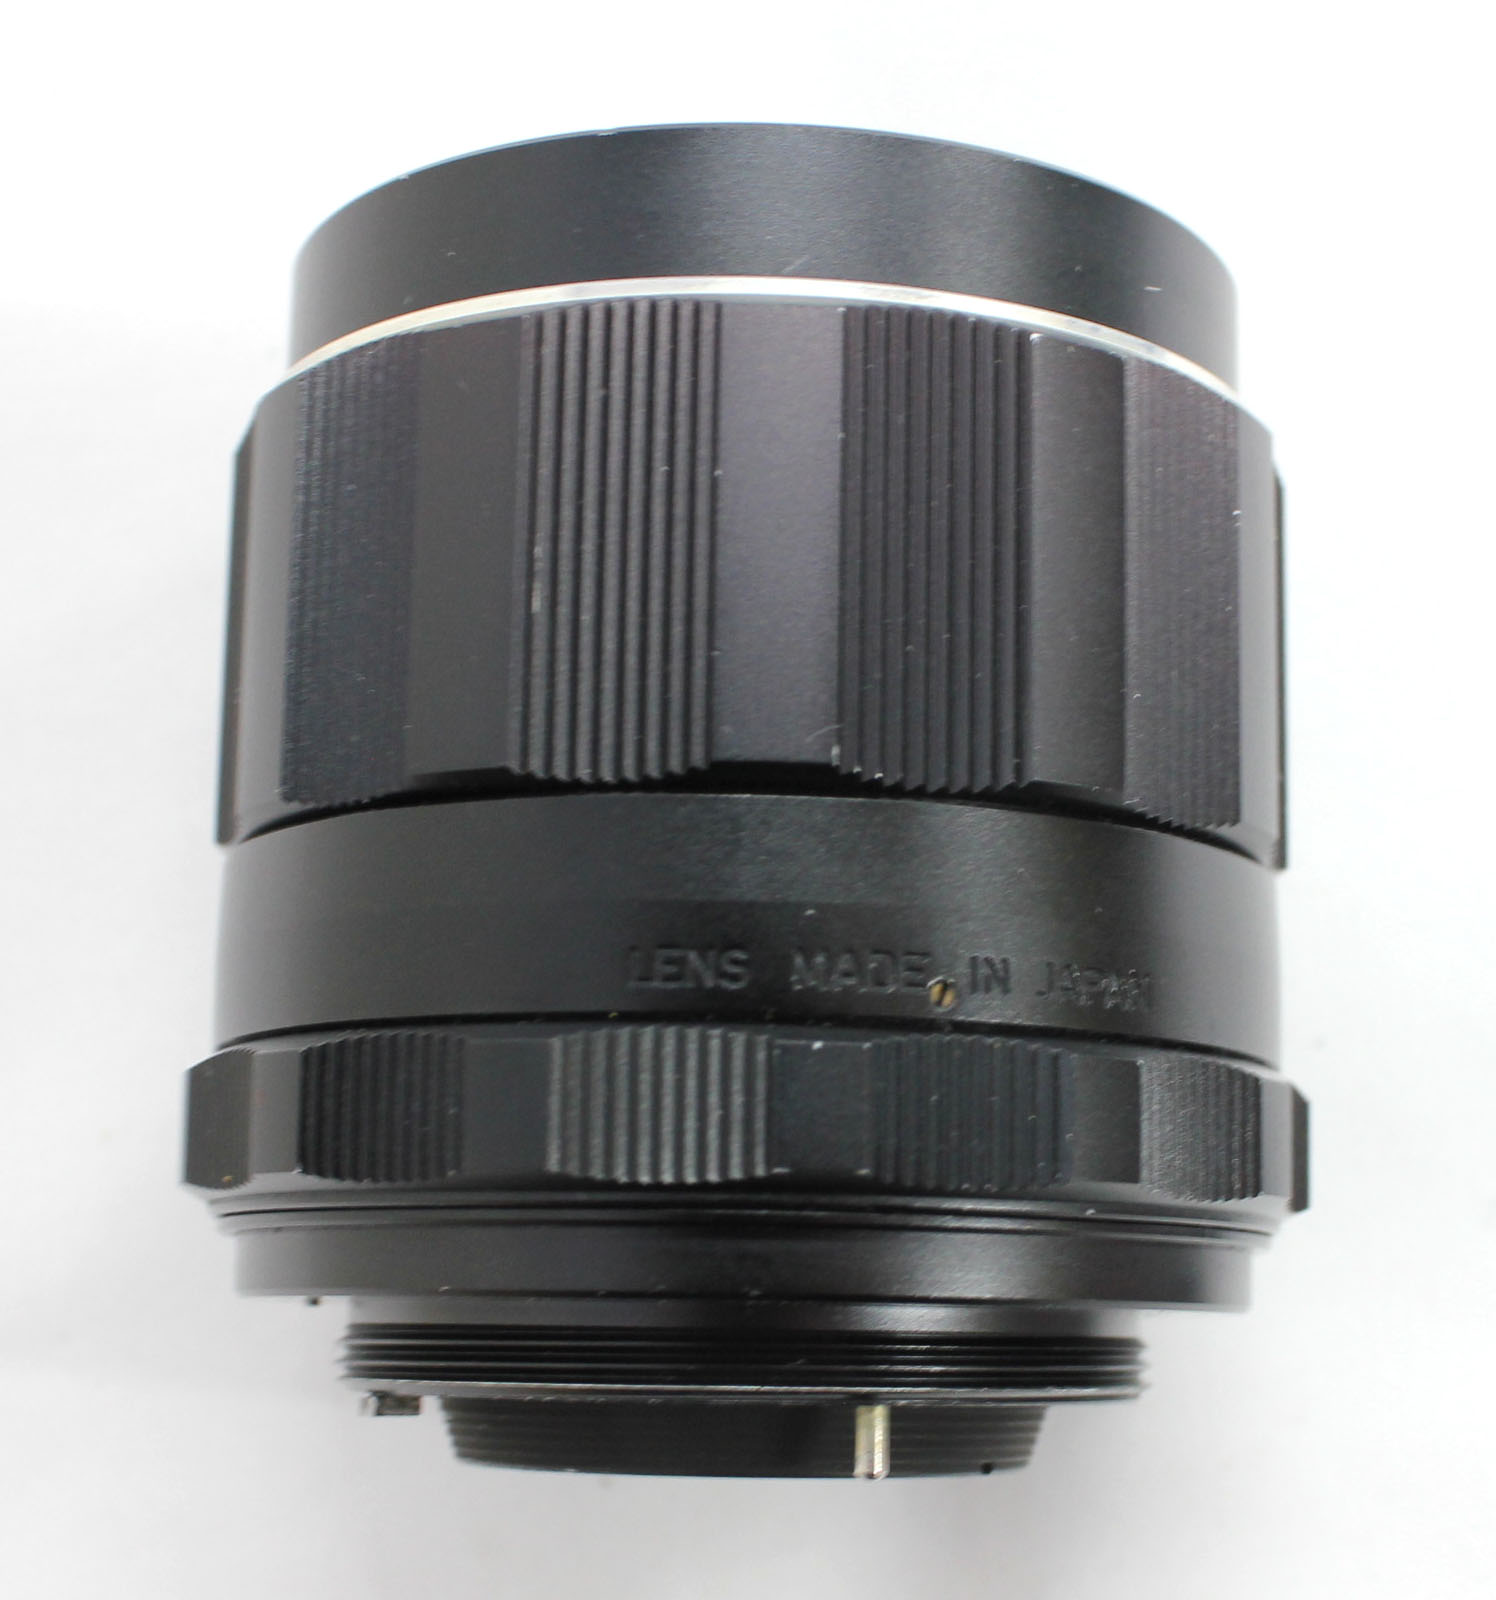  Pentax Super Multi Coated SMC Takumar 35mm F/2 M42 Wide Angle MF Lens from Japan Photo 4